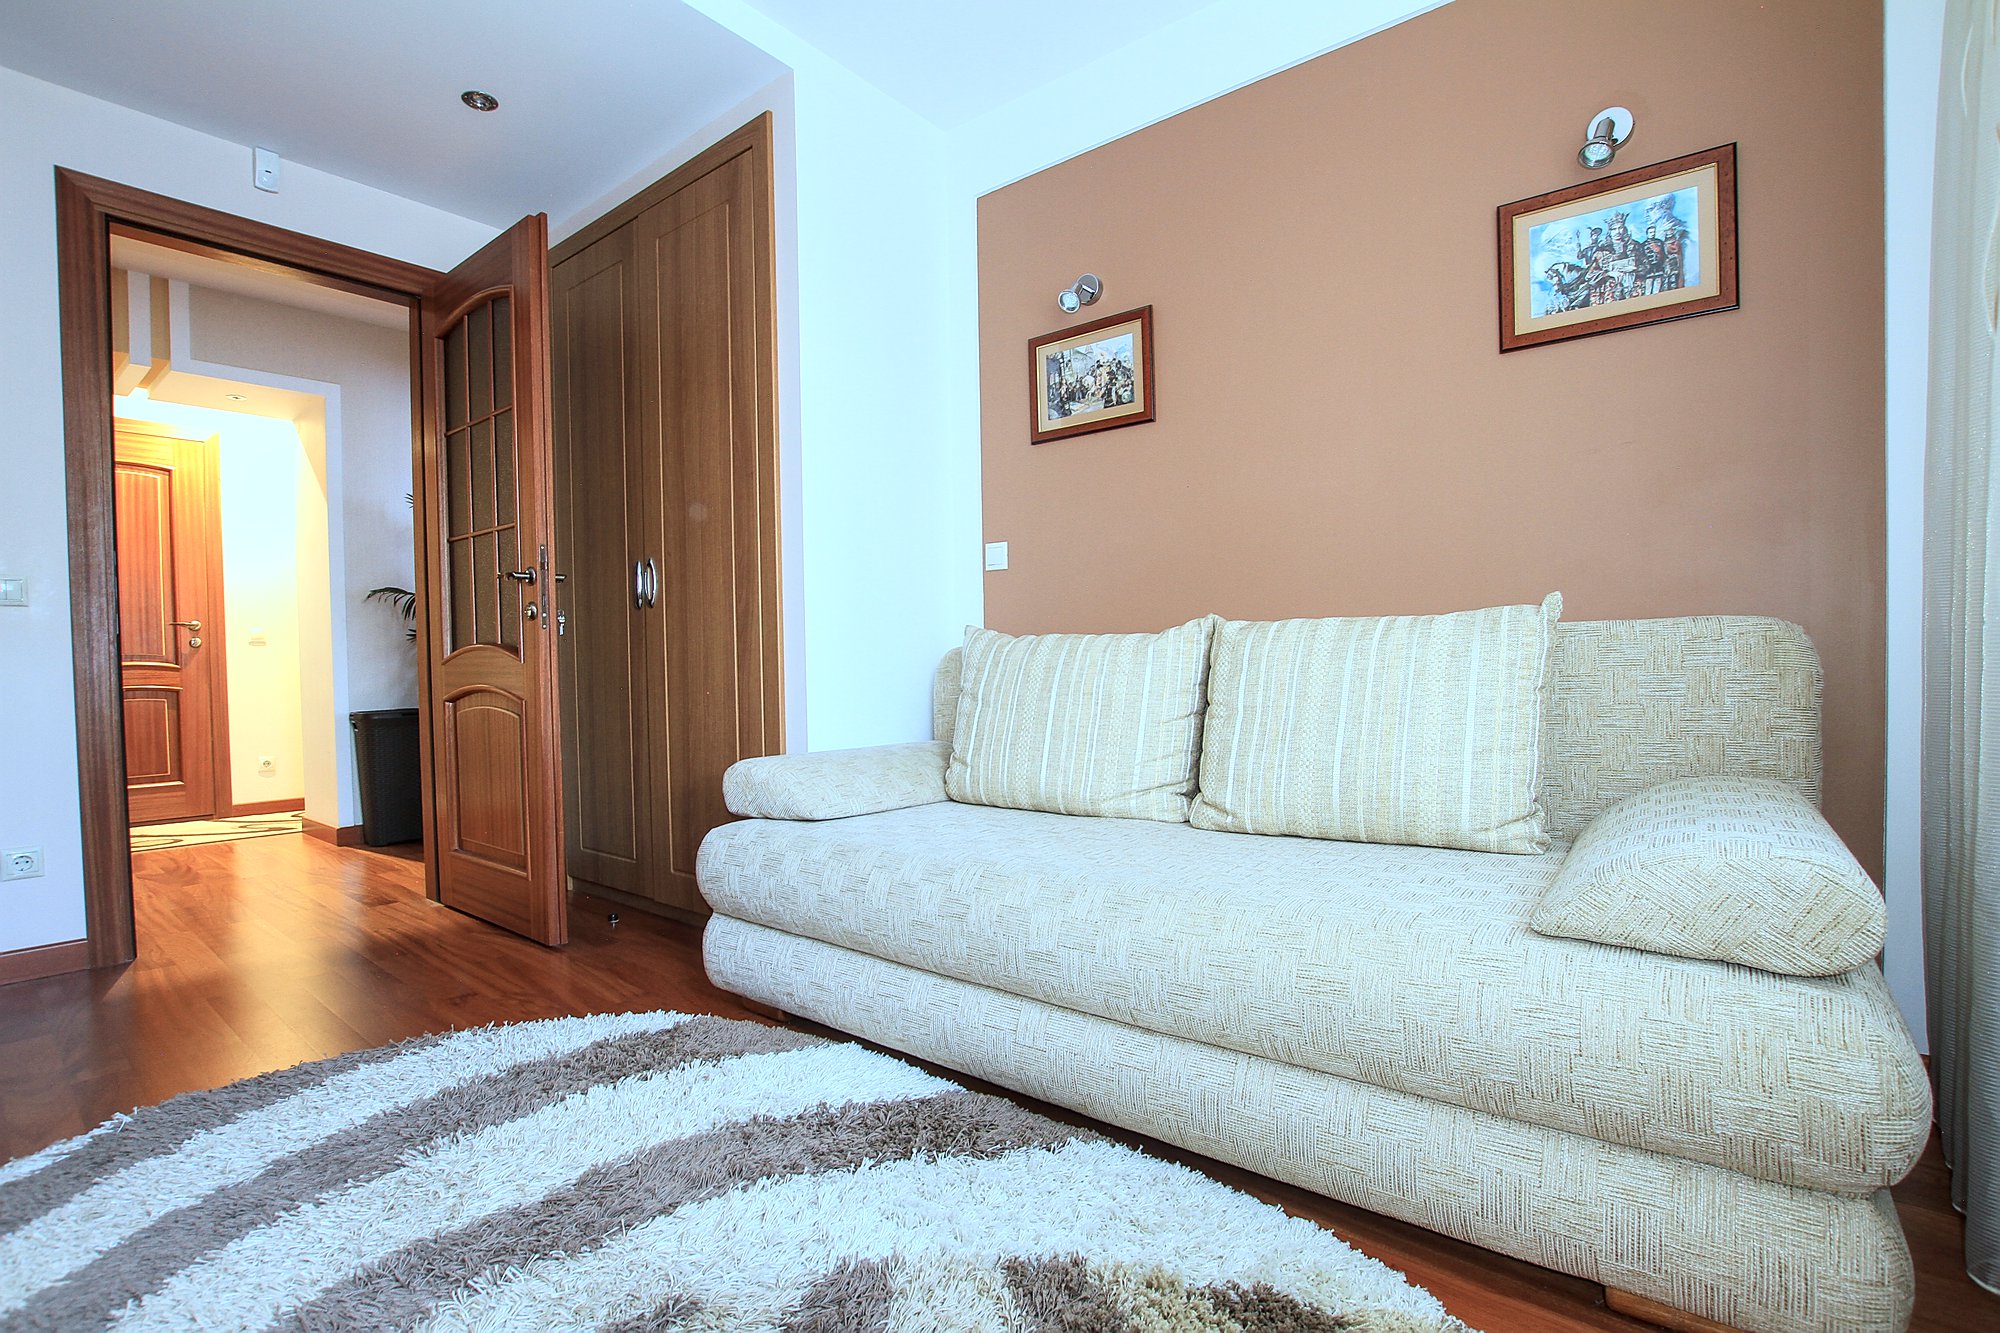 Botanica Family Apartment ist ein 3 Zimmer Apartment zur Miete in Chisinau, Moldova